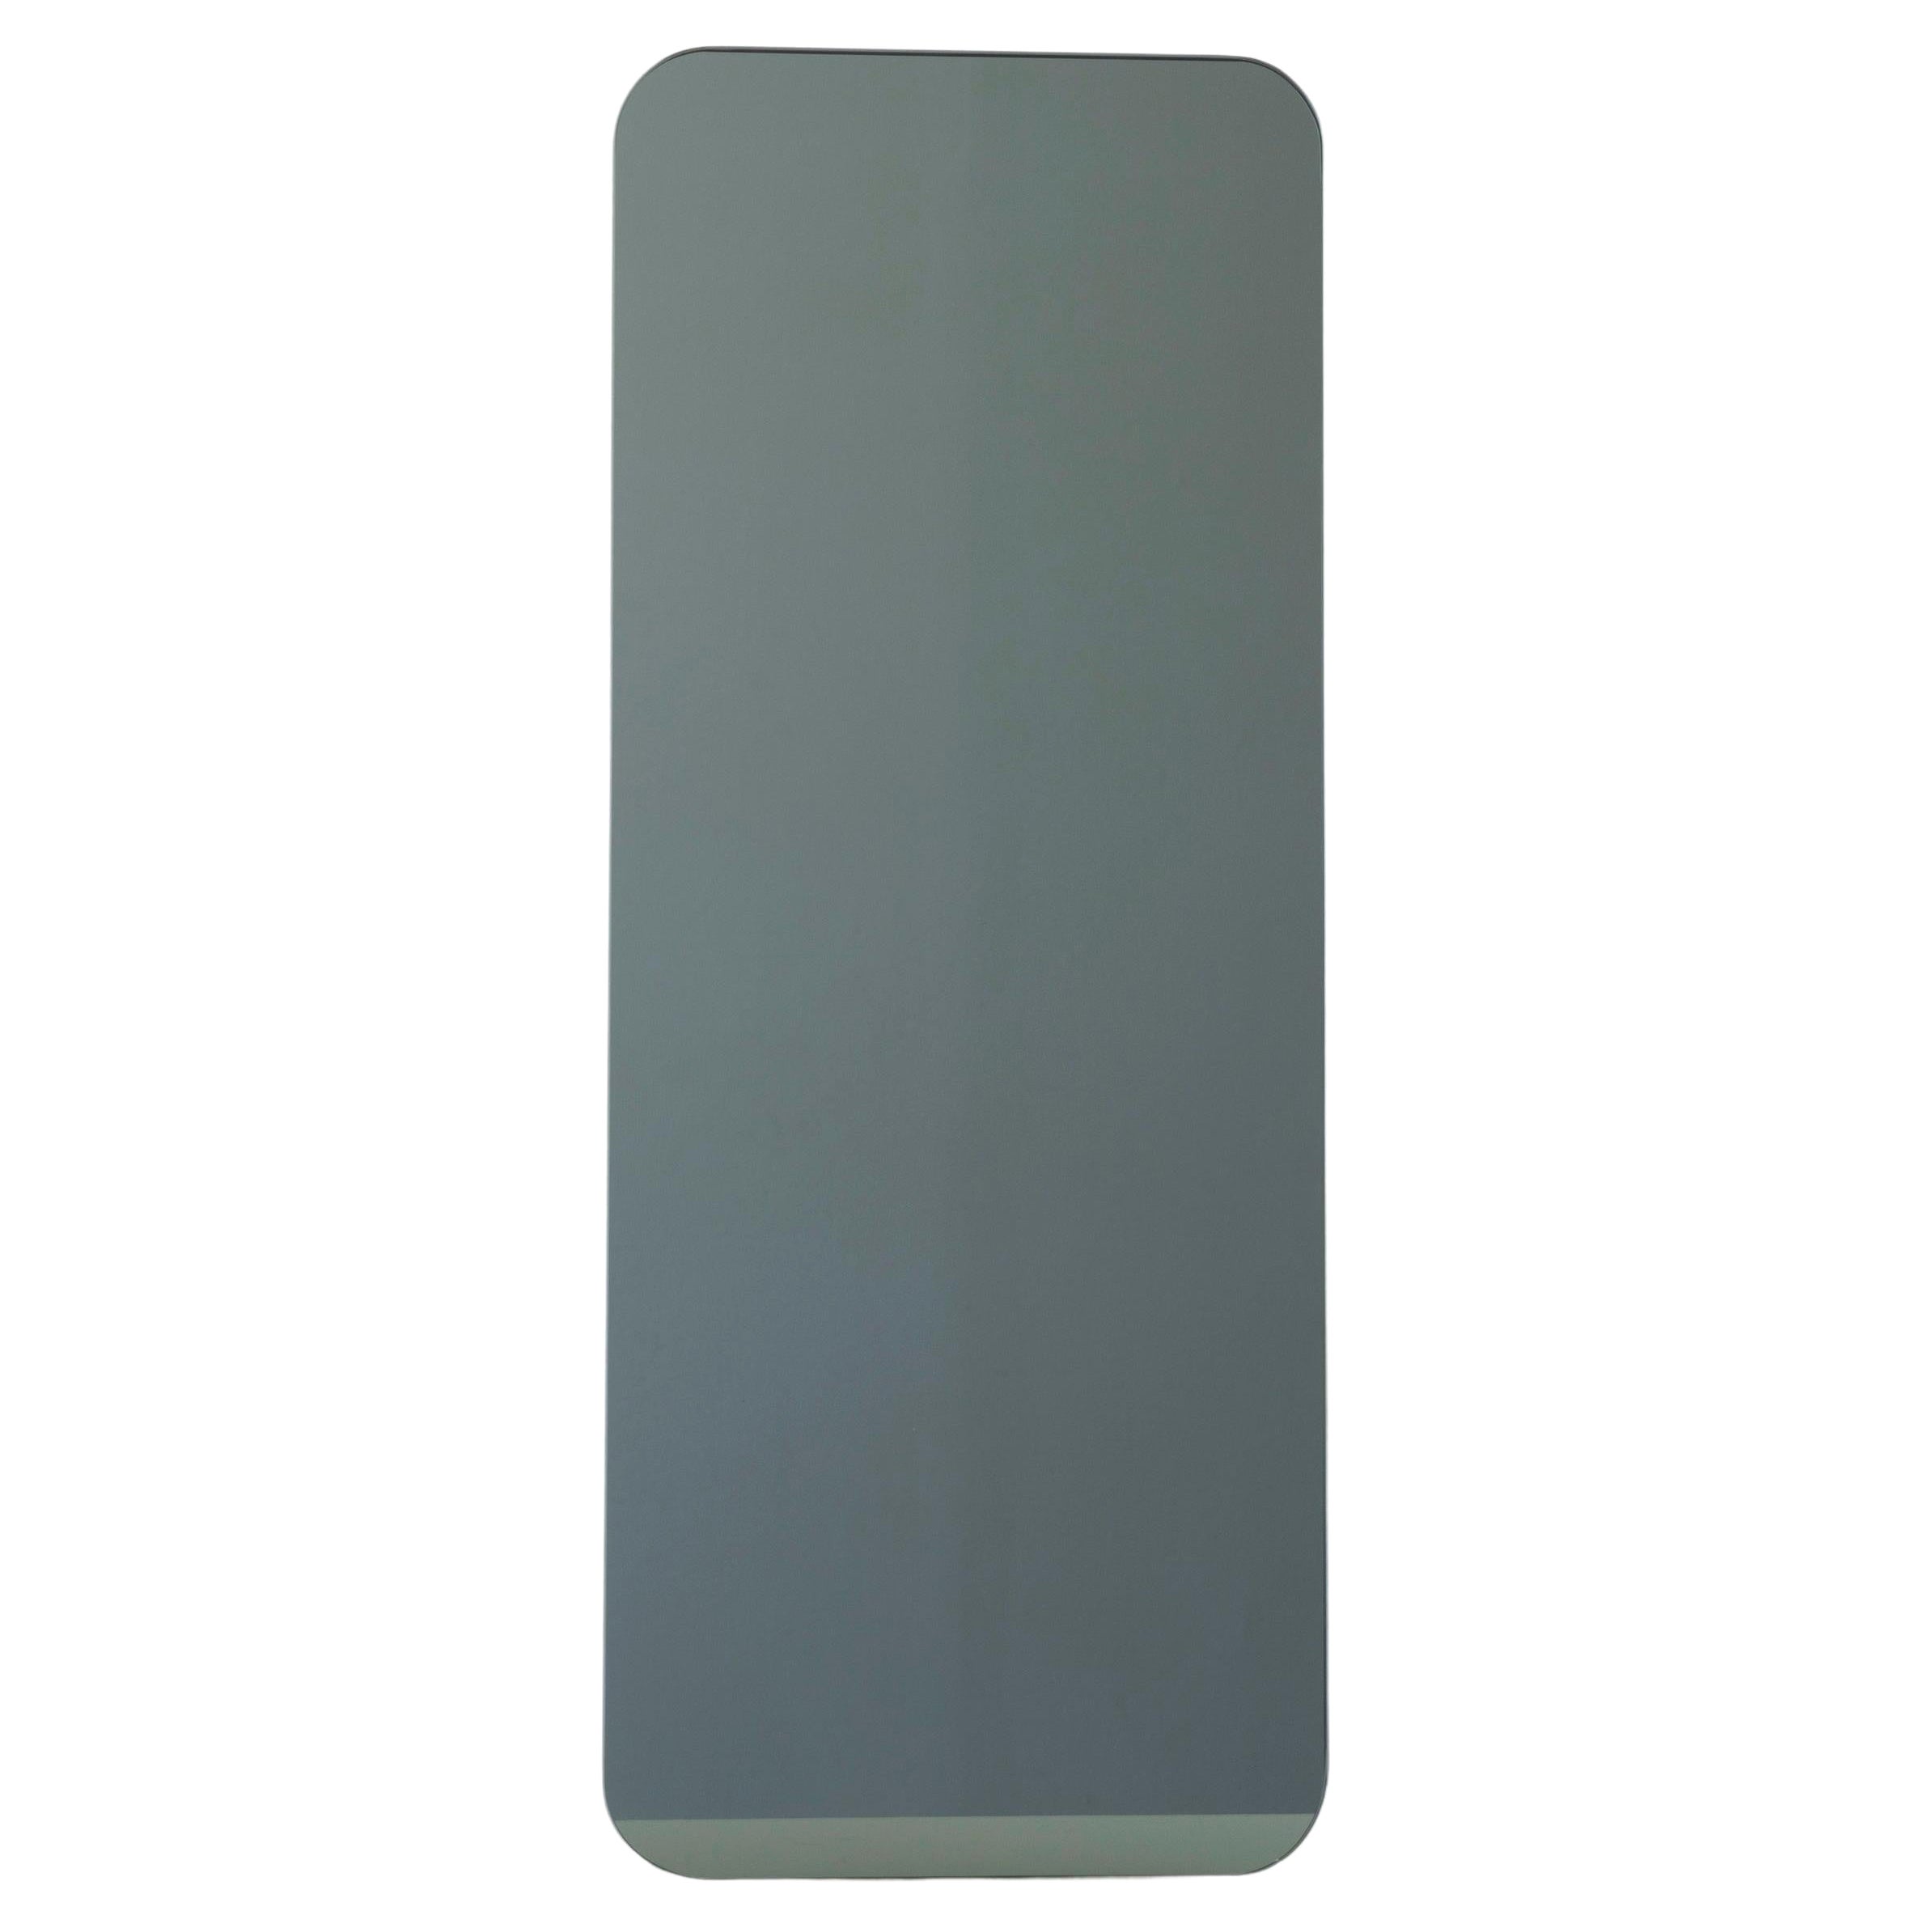 Quadris Black Tinted Rectangular Frameless Modern Mirror Floating Effect, Large For Sale